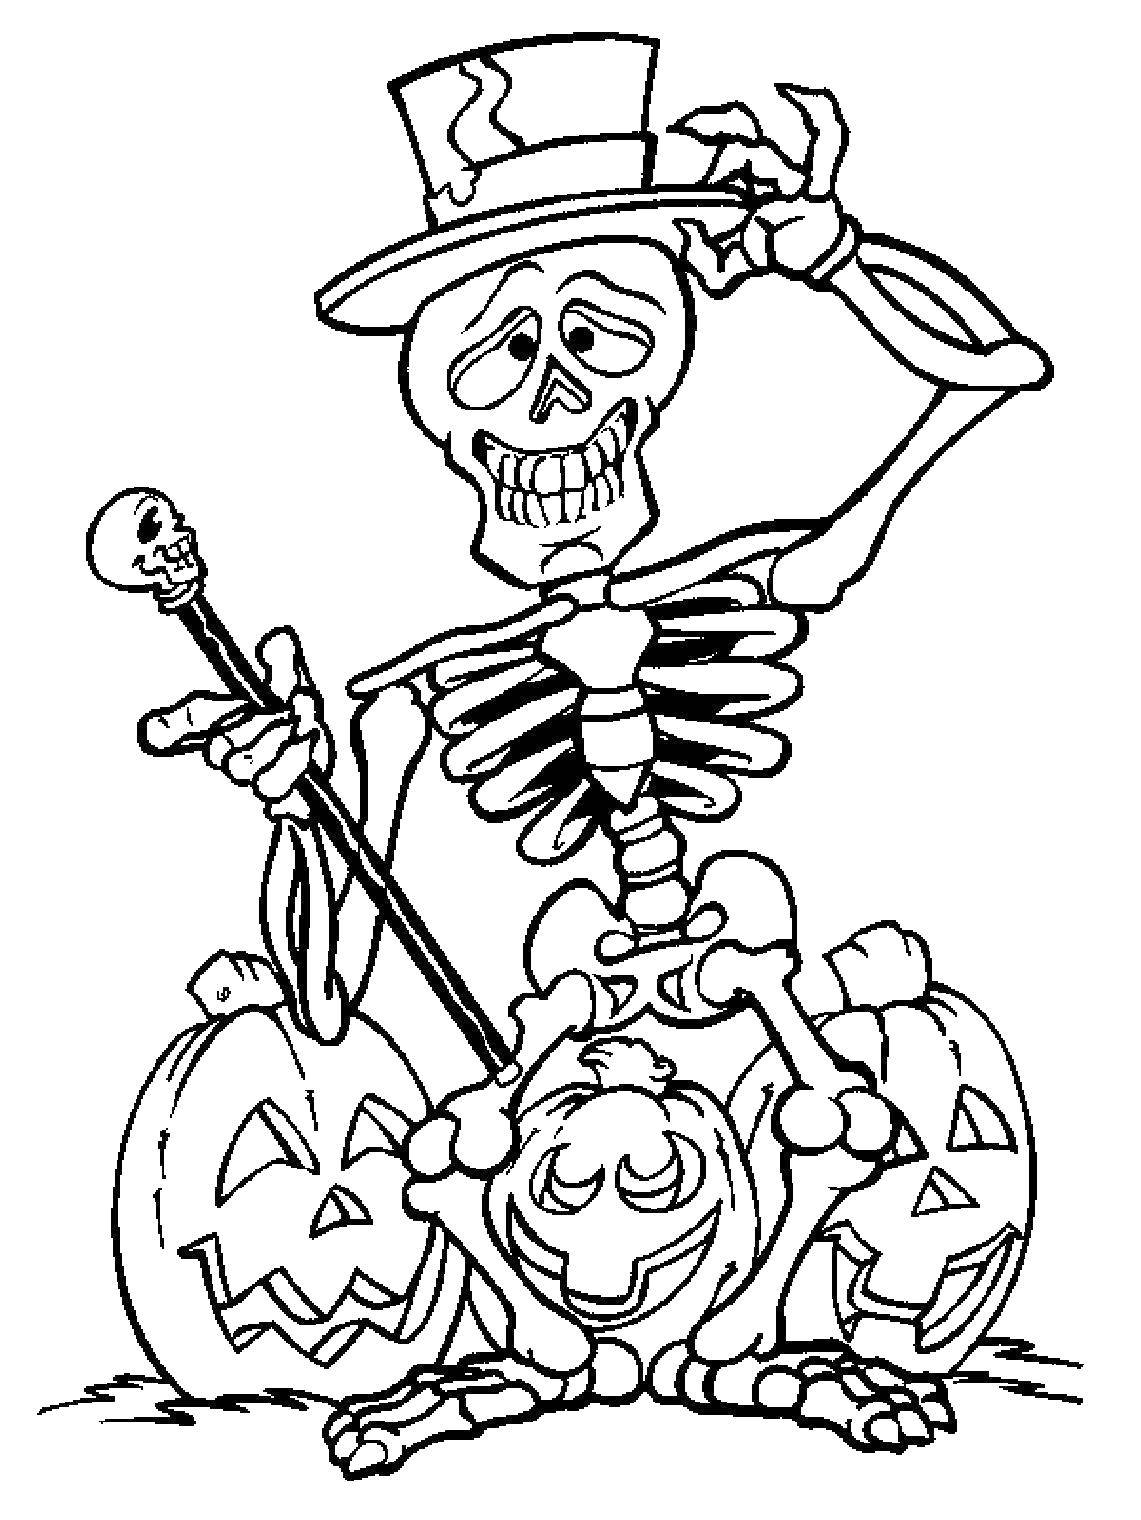 Coloring Skeletons in the cylinder and pumpkin. Category pumpkin Halloween. Tags:  Halloween, pumpkin, skeleton.